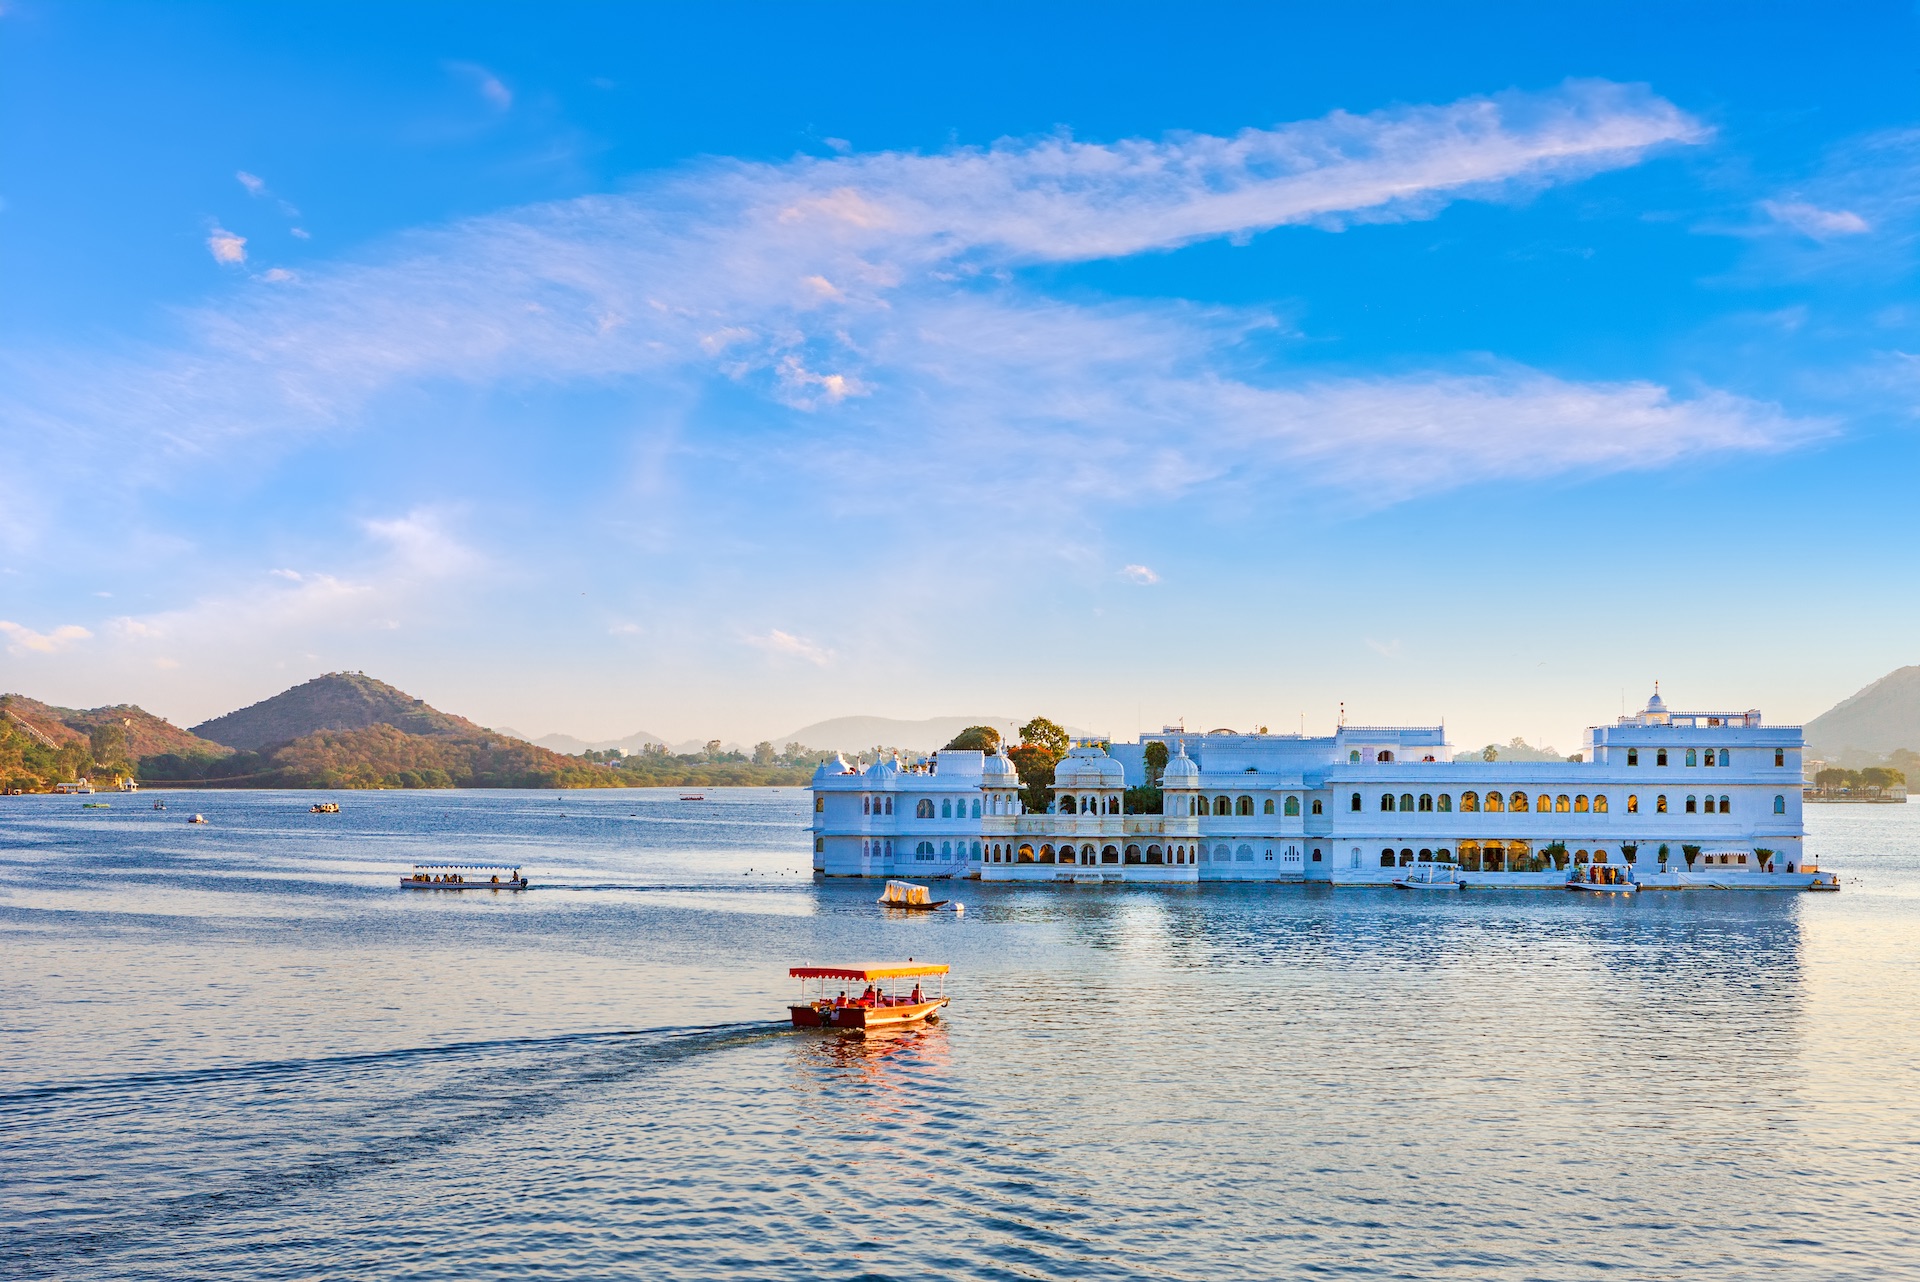 Taj Lake Palace on lake Pichola in Udaipur, Rajasthan, India.